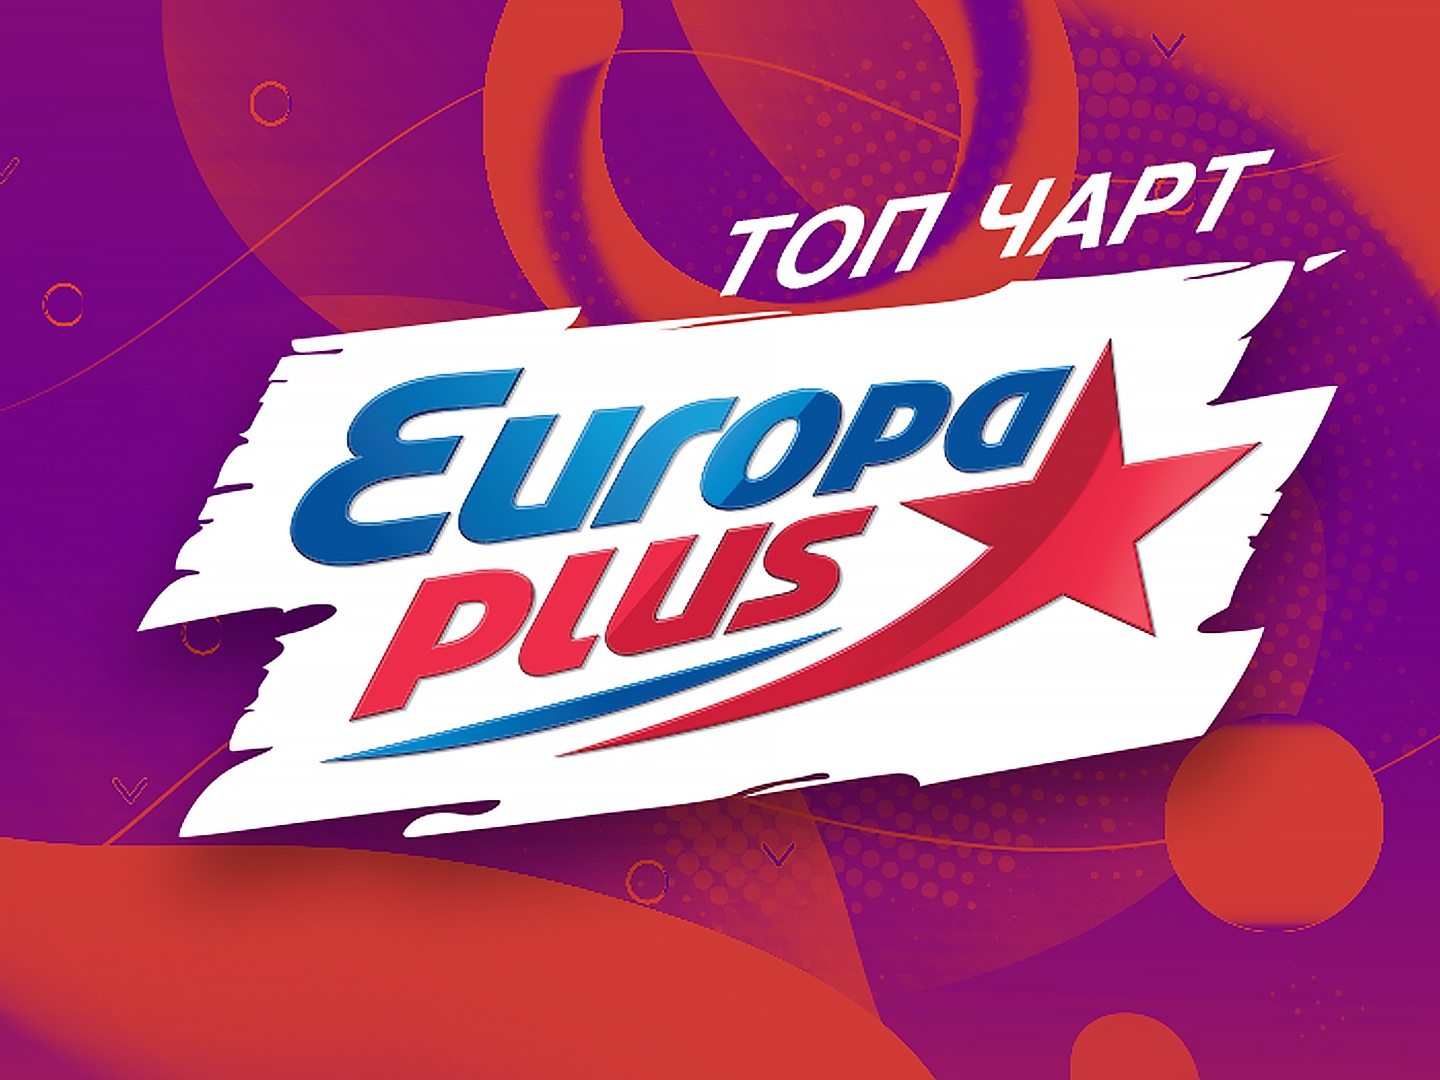 Чарты радио европа. Europa Plus чарт. Европа плюс. Значок Европа плюс. Европа плюс чарт муз ТВ.